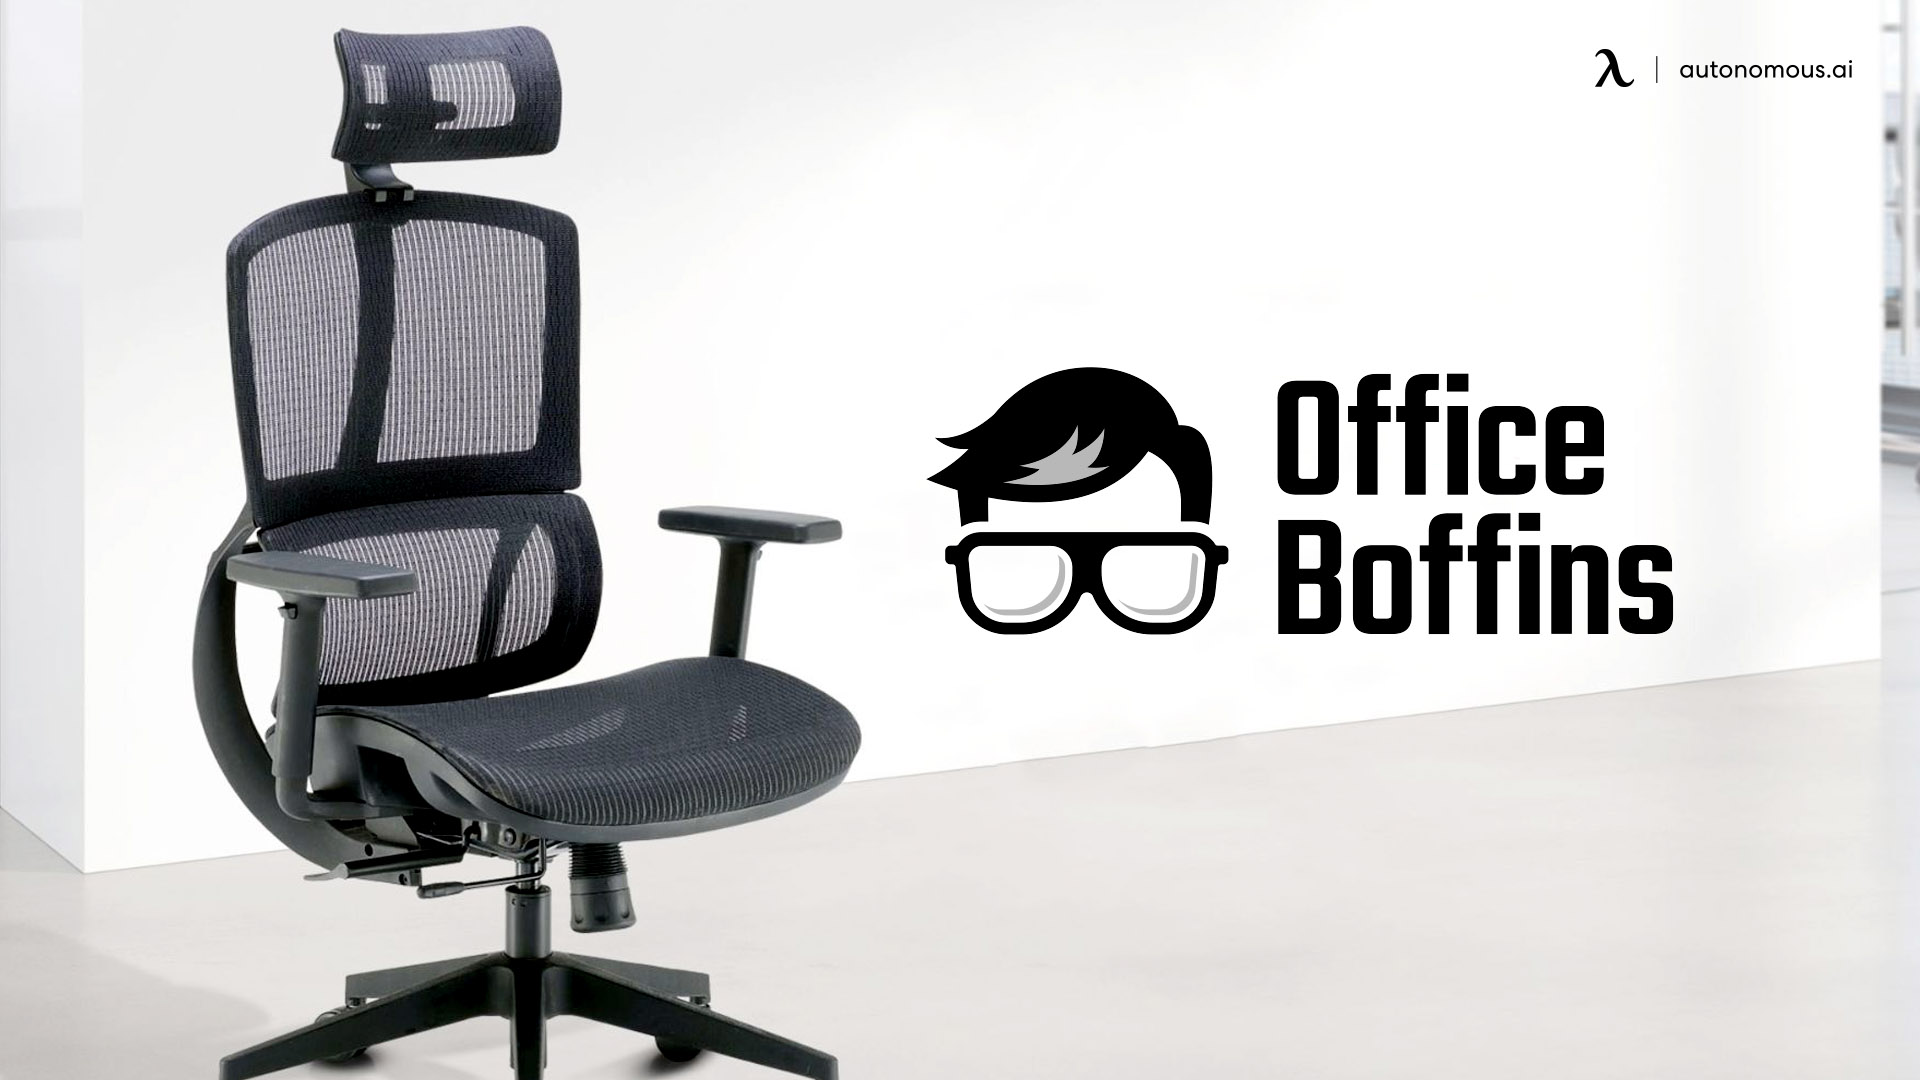 office boffins